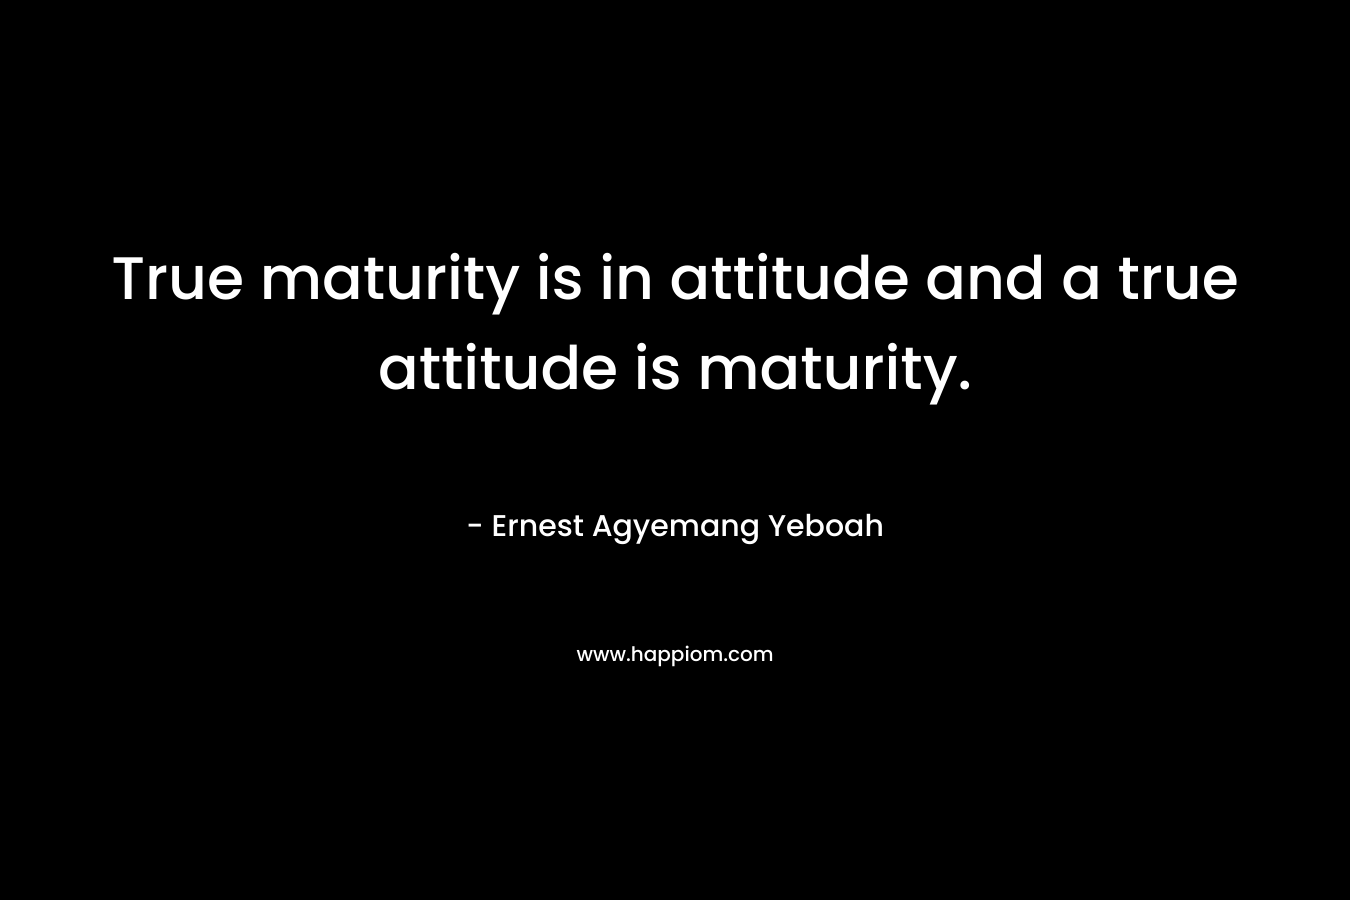 True maturity is in attitude and a true attitude is maturity.